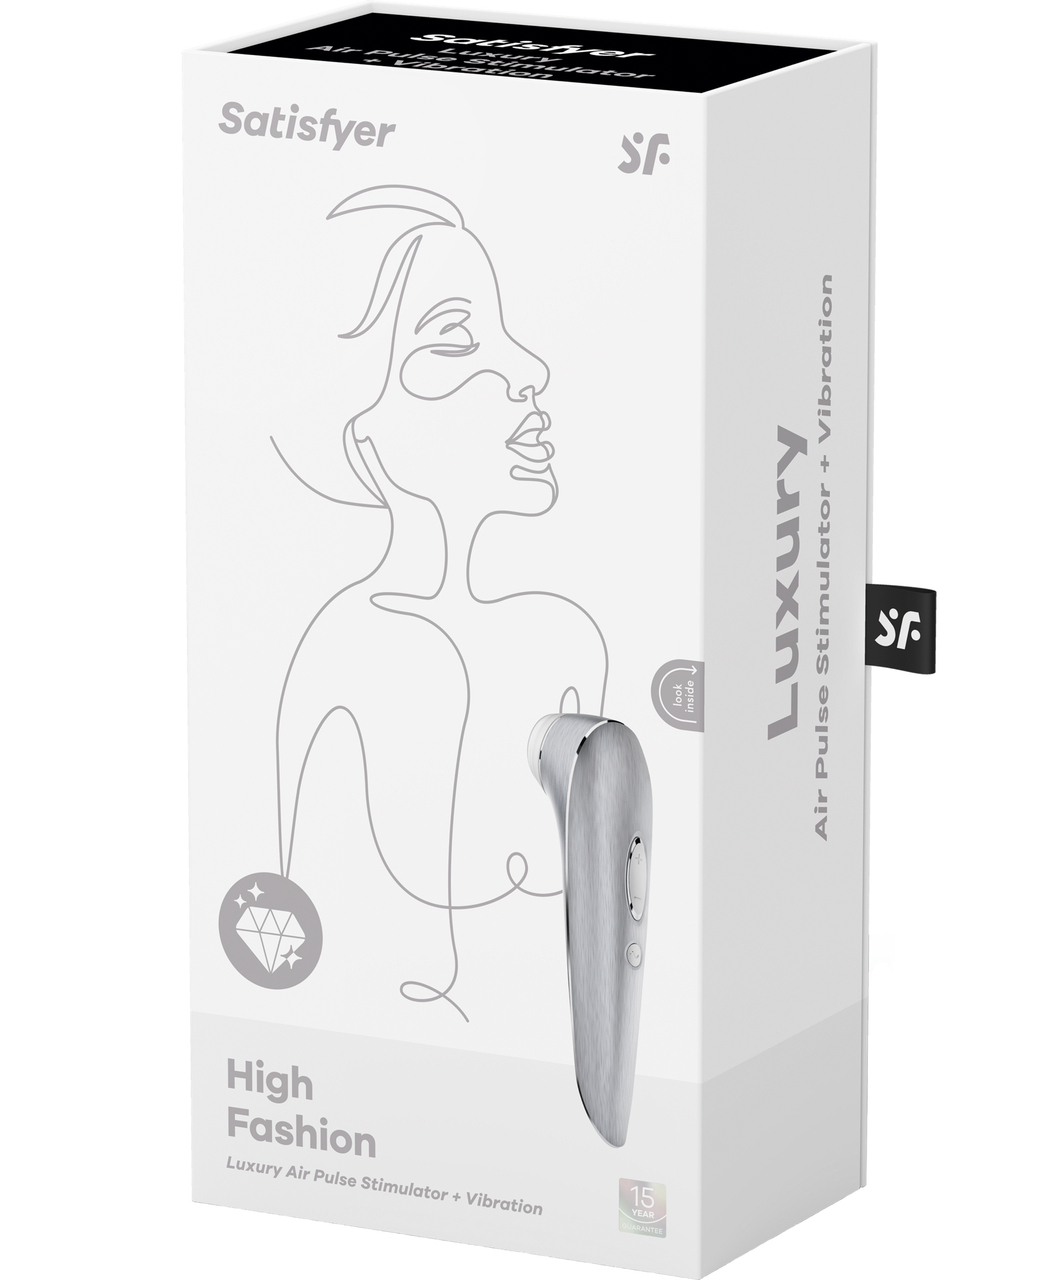 Satisfyer Luxury High Fashion clitoral stimulator